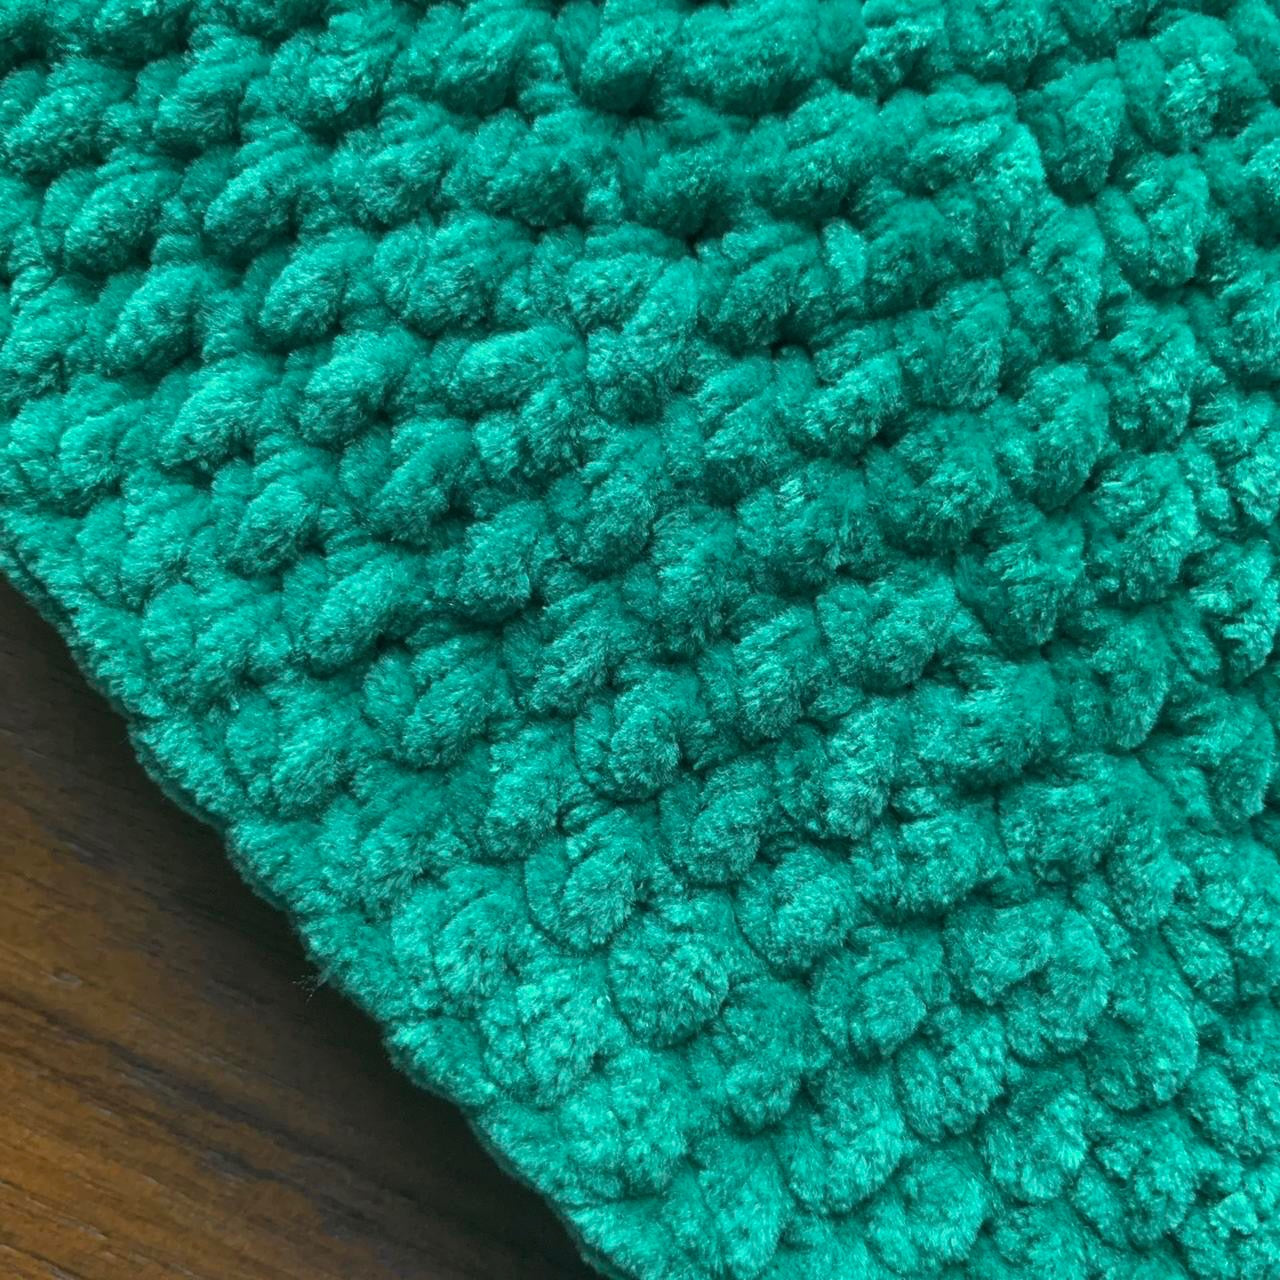 Handmade crushed velvet crochet bucket hat in sage green